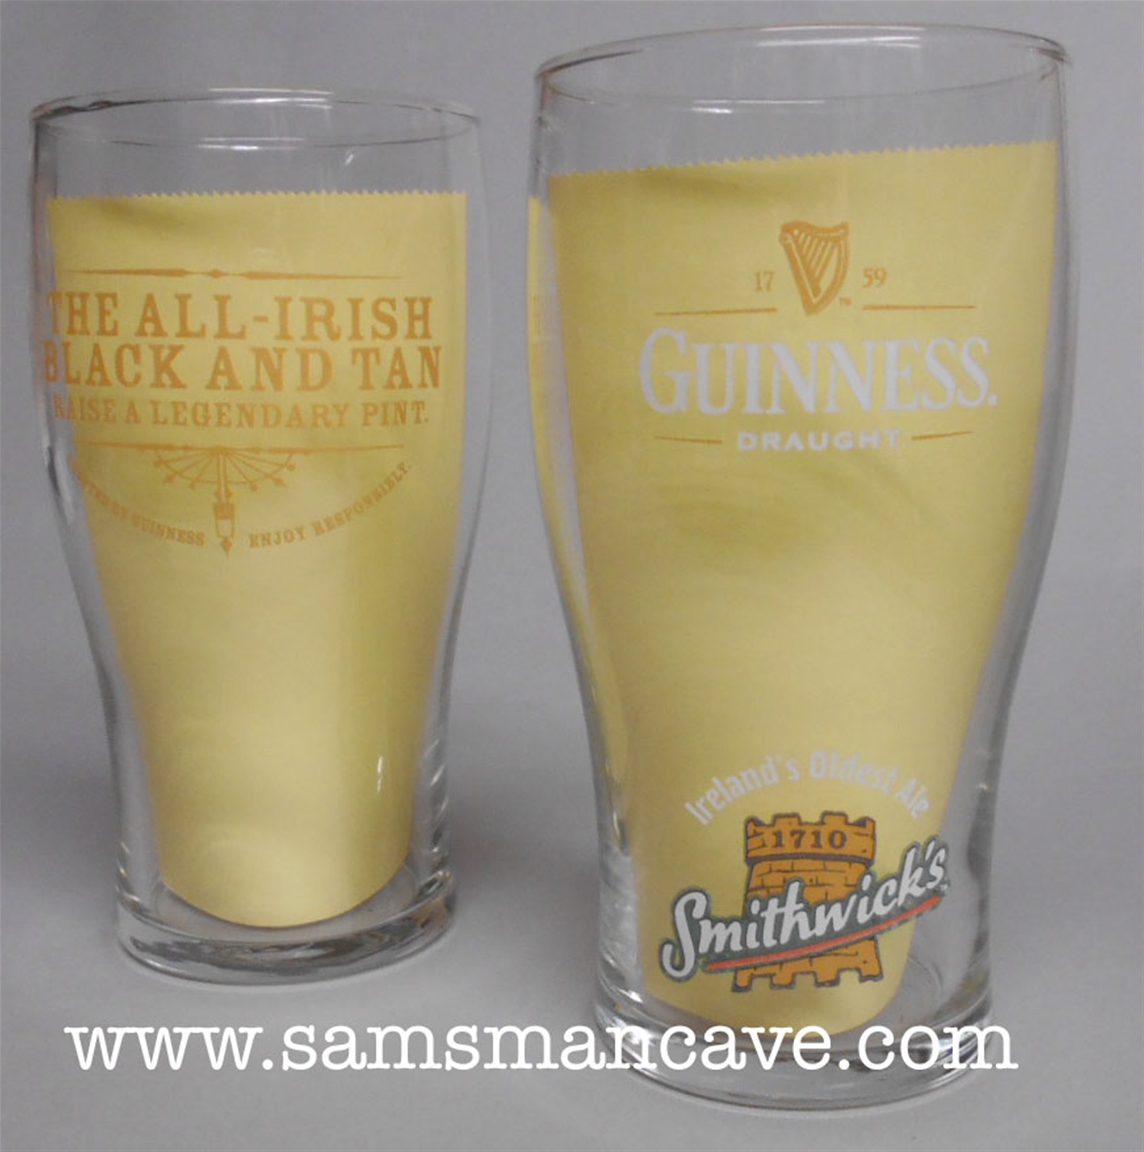 Guinness Smithwick's All Irish Black & Tan Glass Set of Two